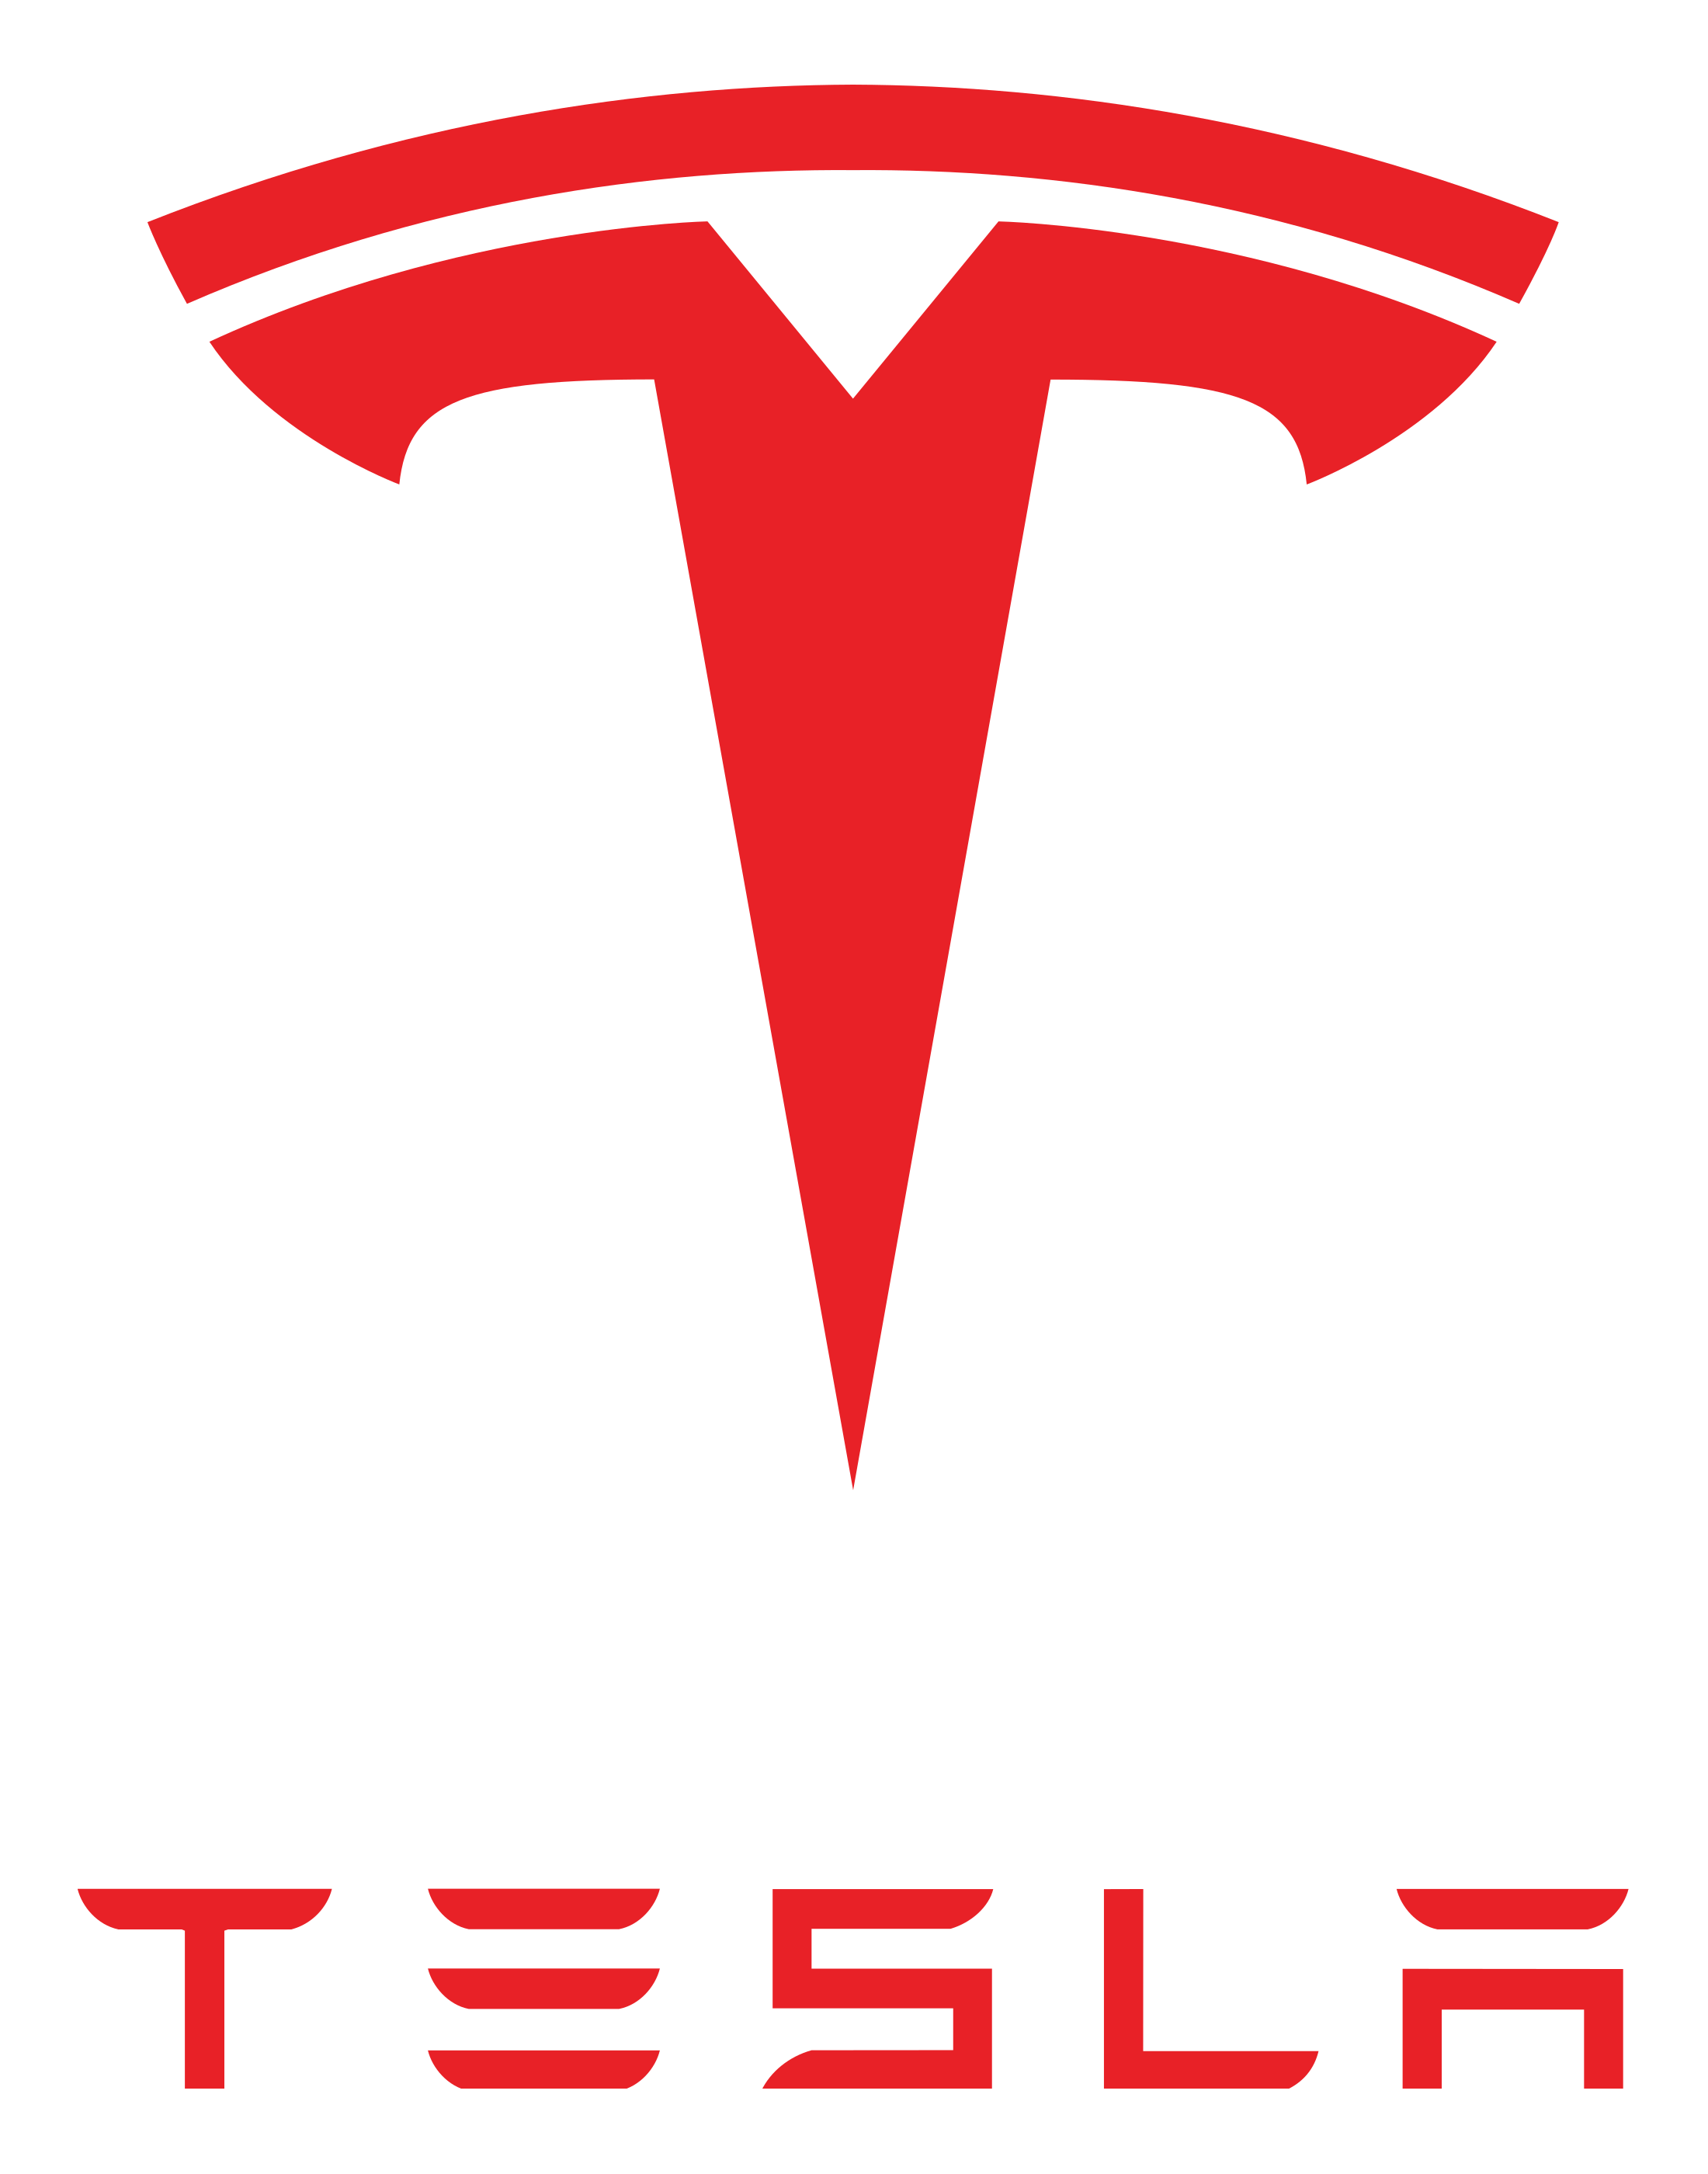 Tesla Brand Logo